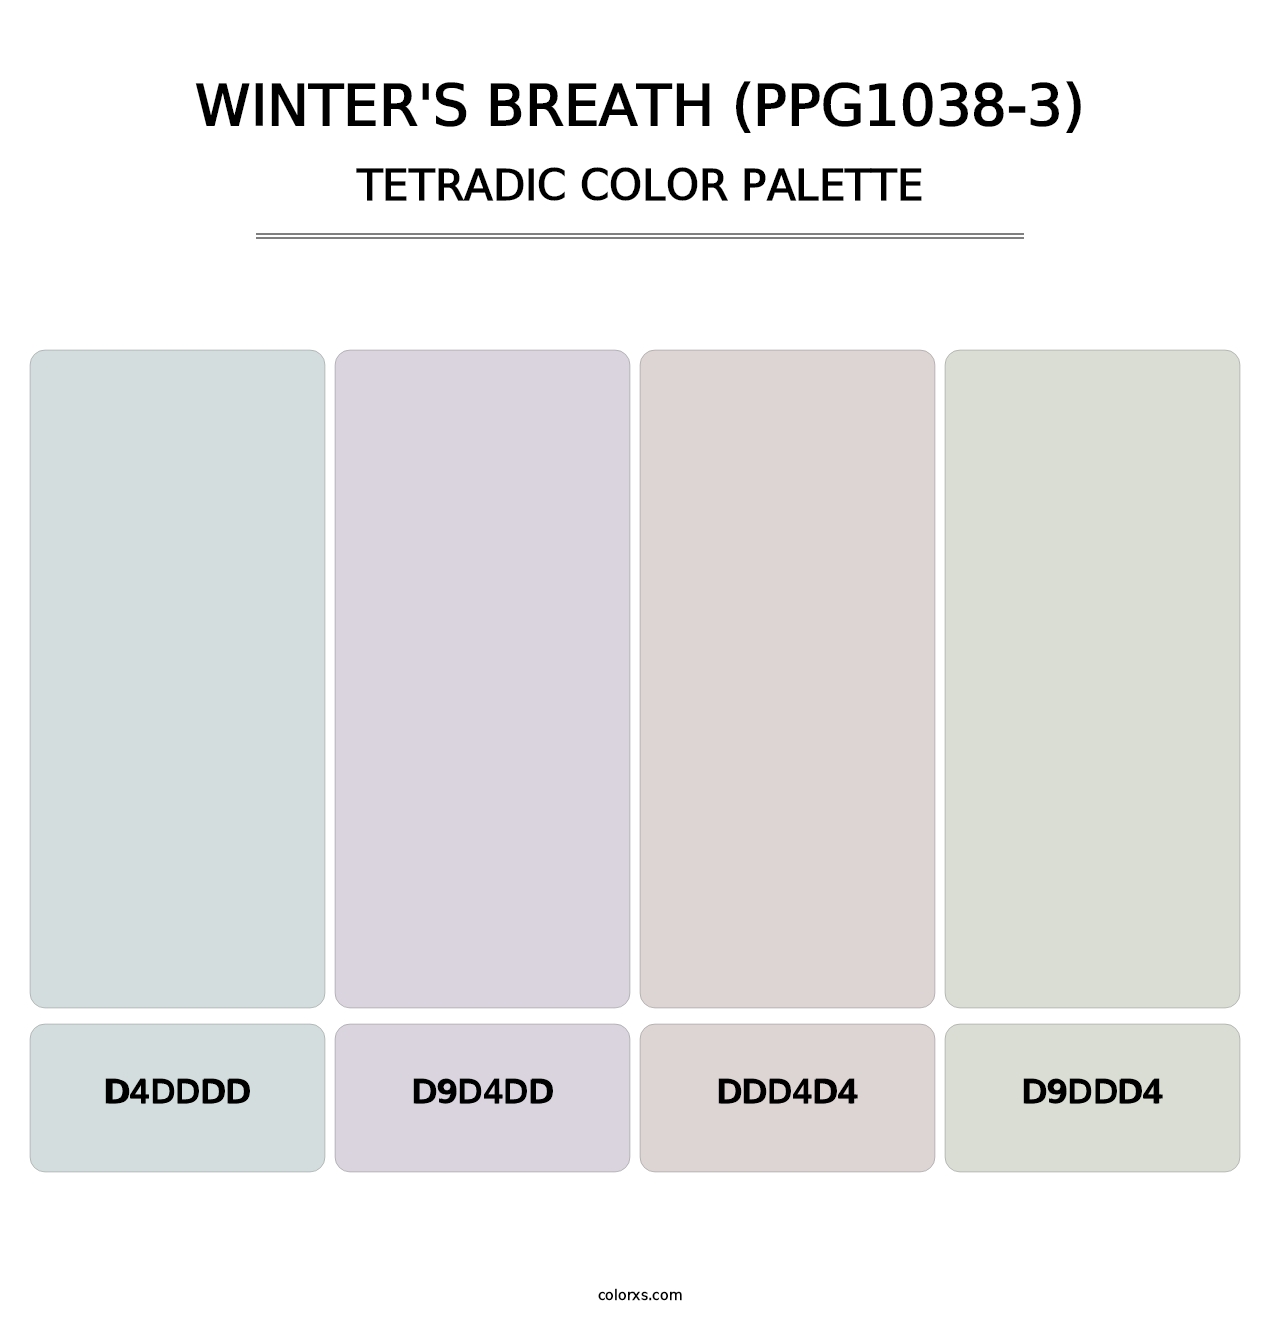 Winter's Breath (PPG1038-3) - Tetradic Color Palette